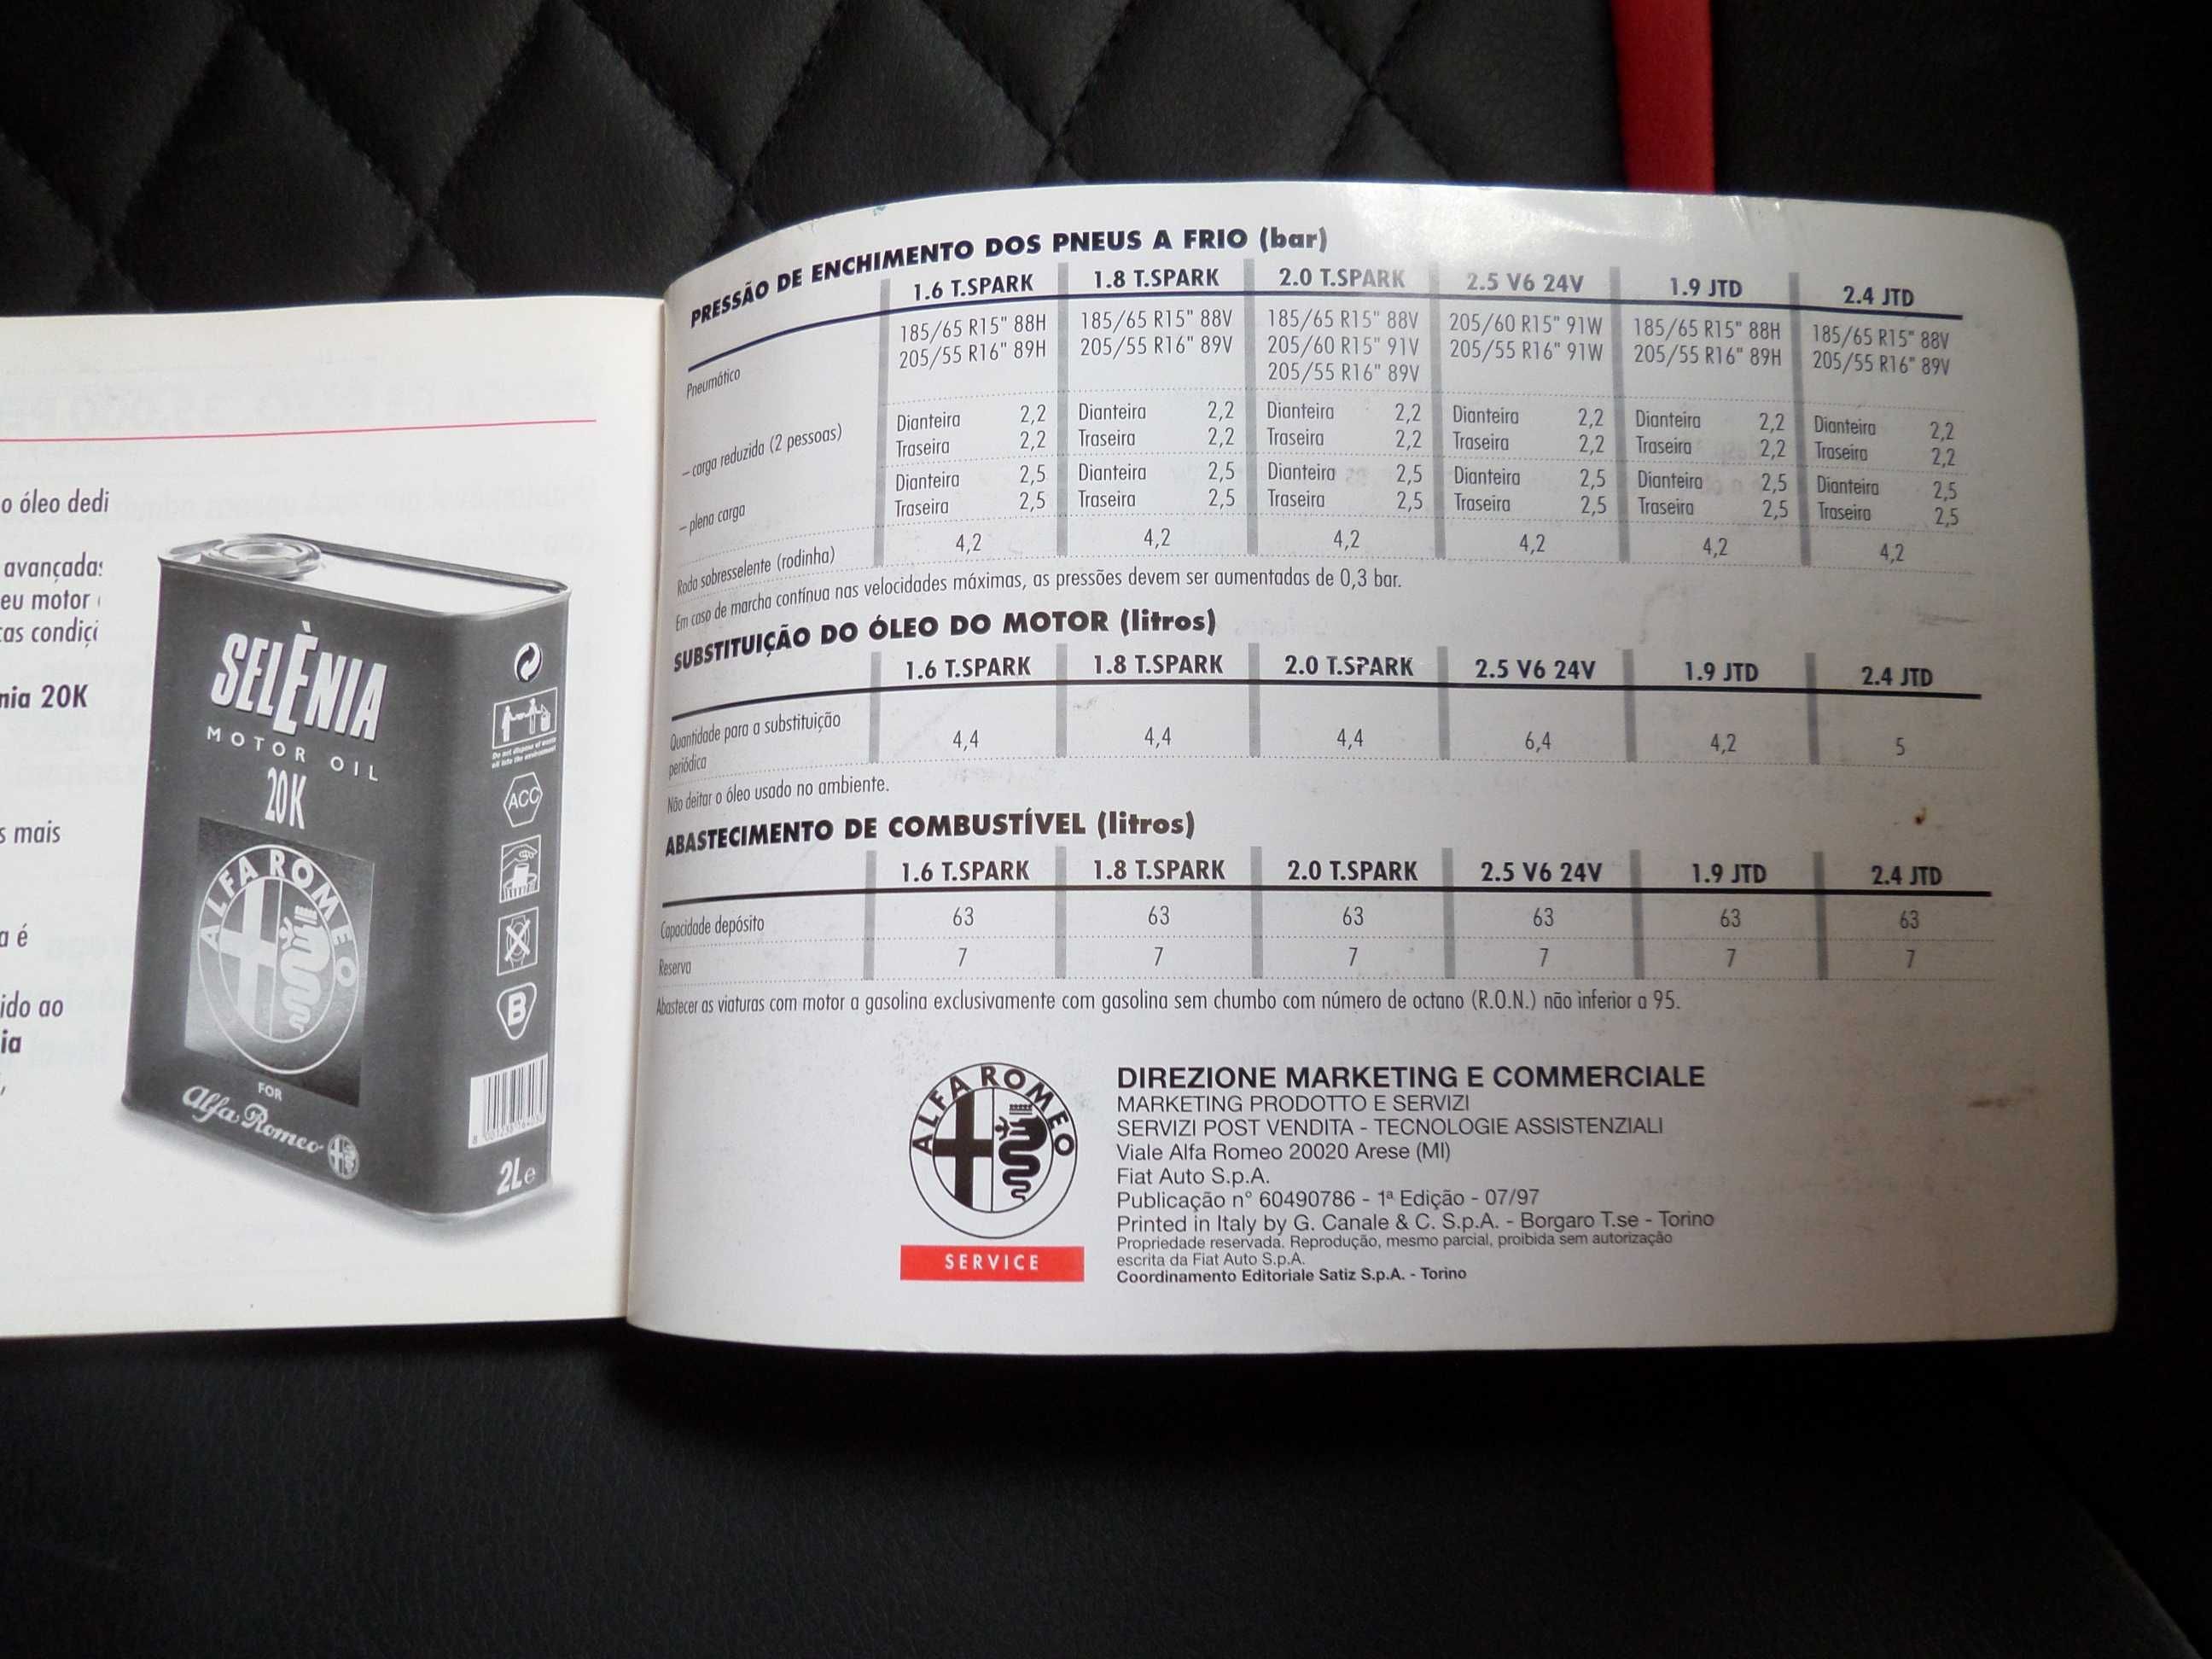 Manual Alfa Romeo 156  +  livro de 'serviço'